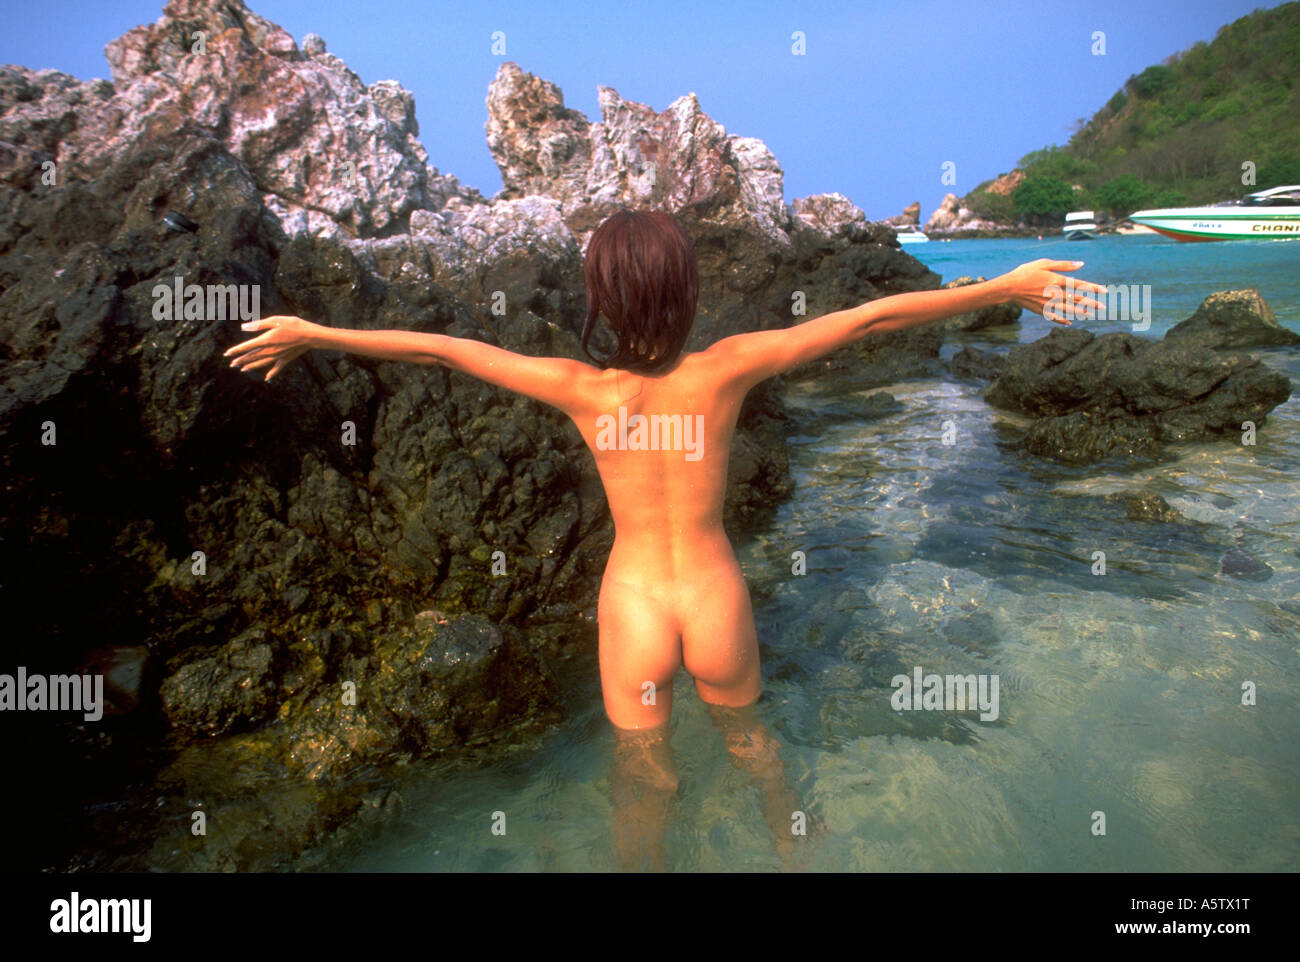 Thai Woman Nude